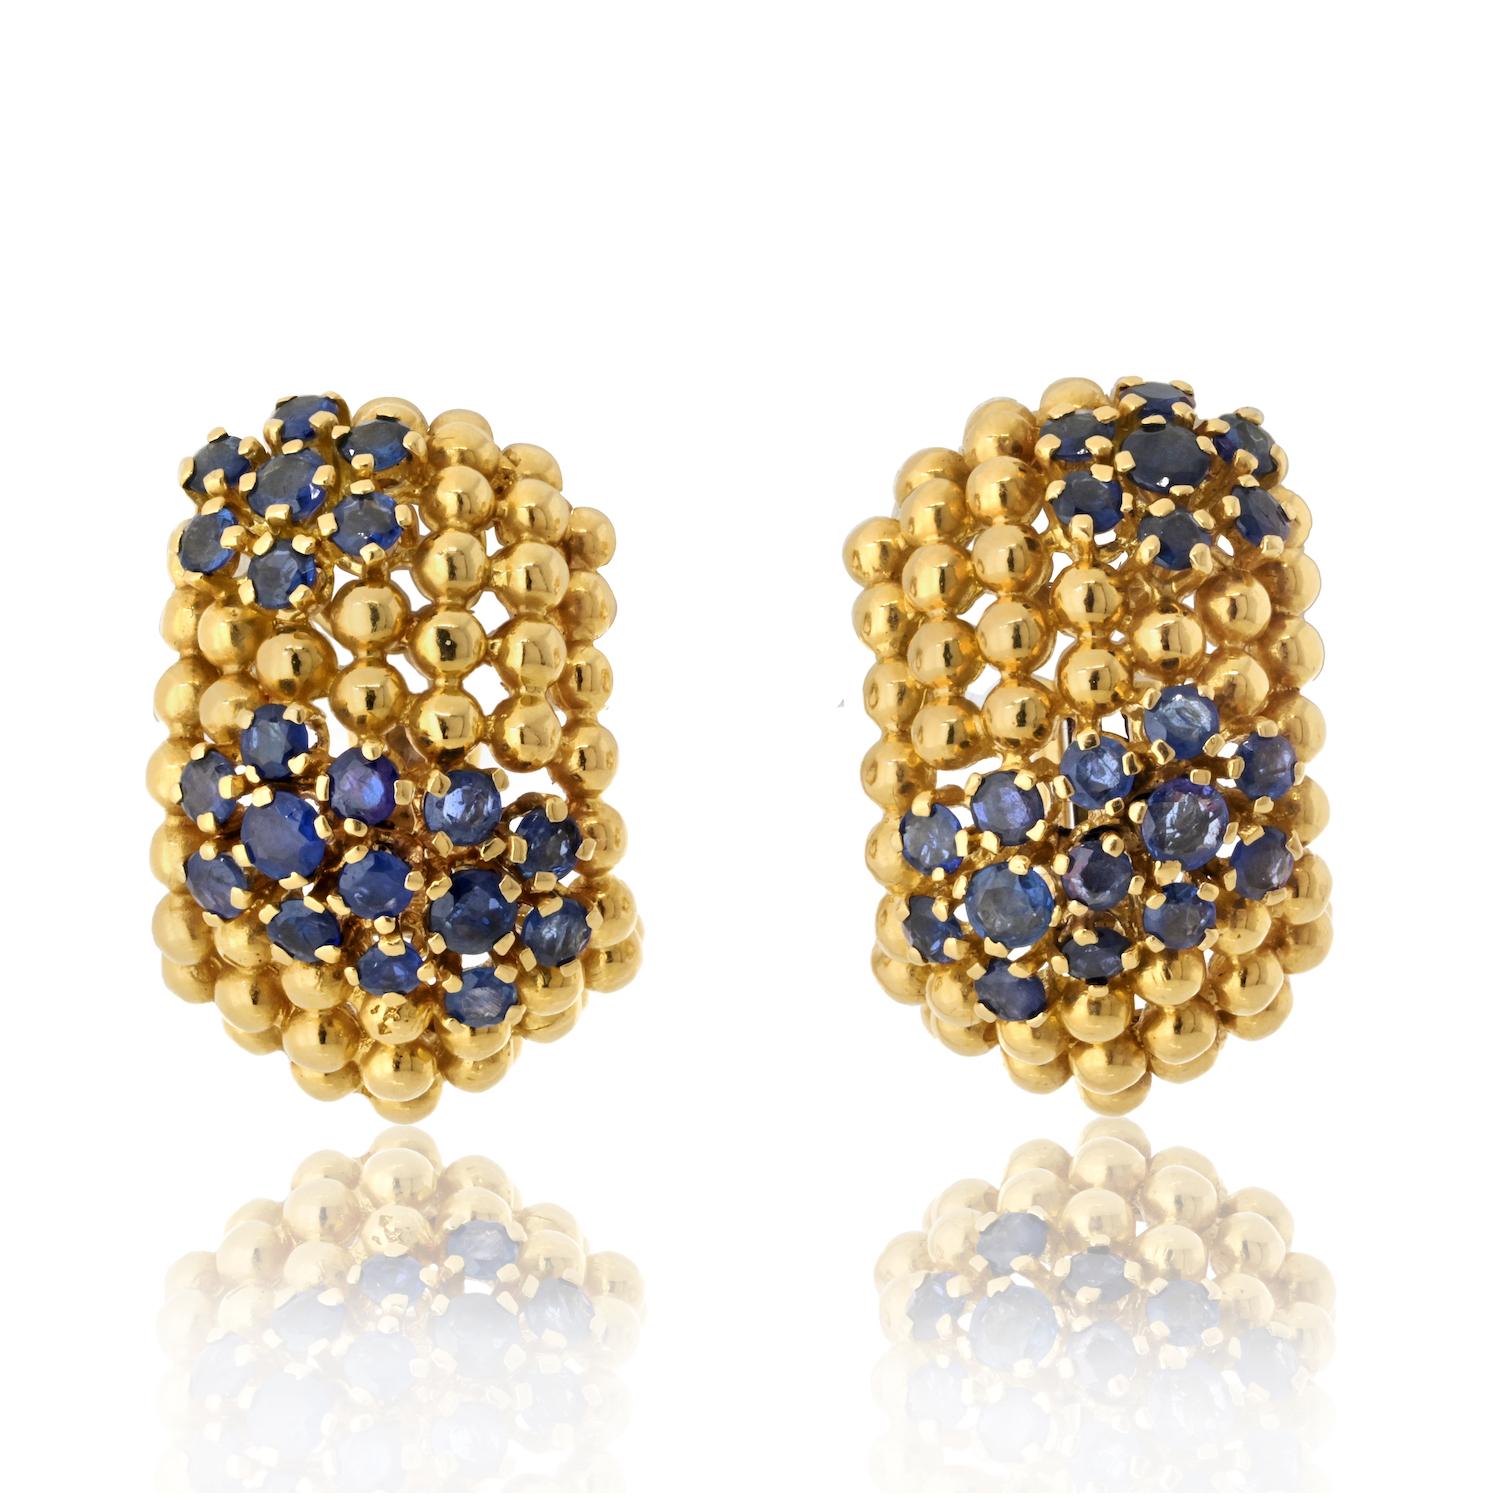 Tiffany & Co. 18K Wabenförmige Saphir-Ohrringe mit Goldperlen von Tiffany & Co. im Angebot